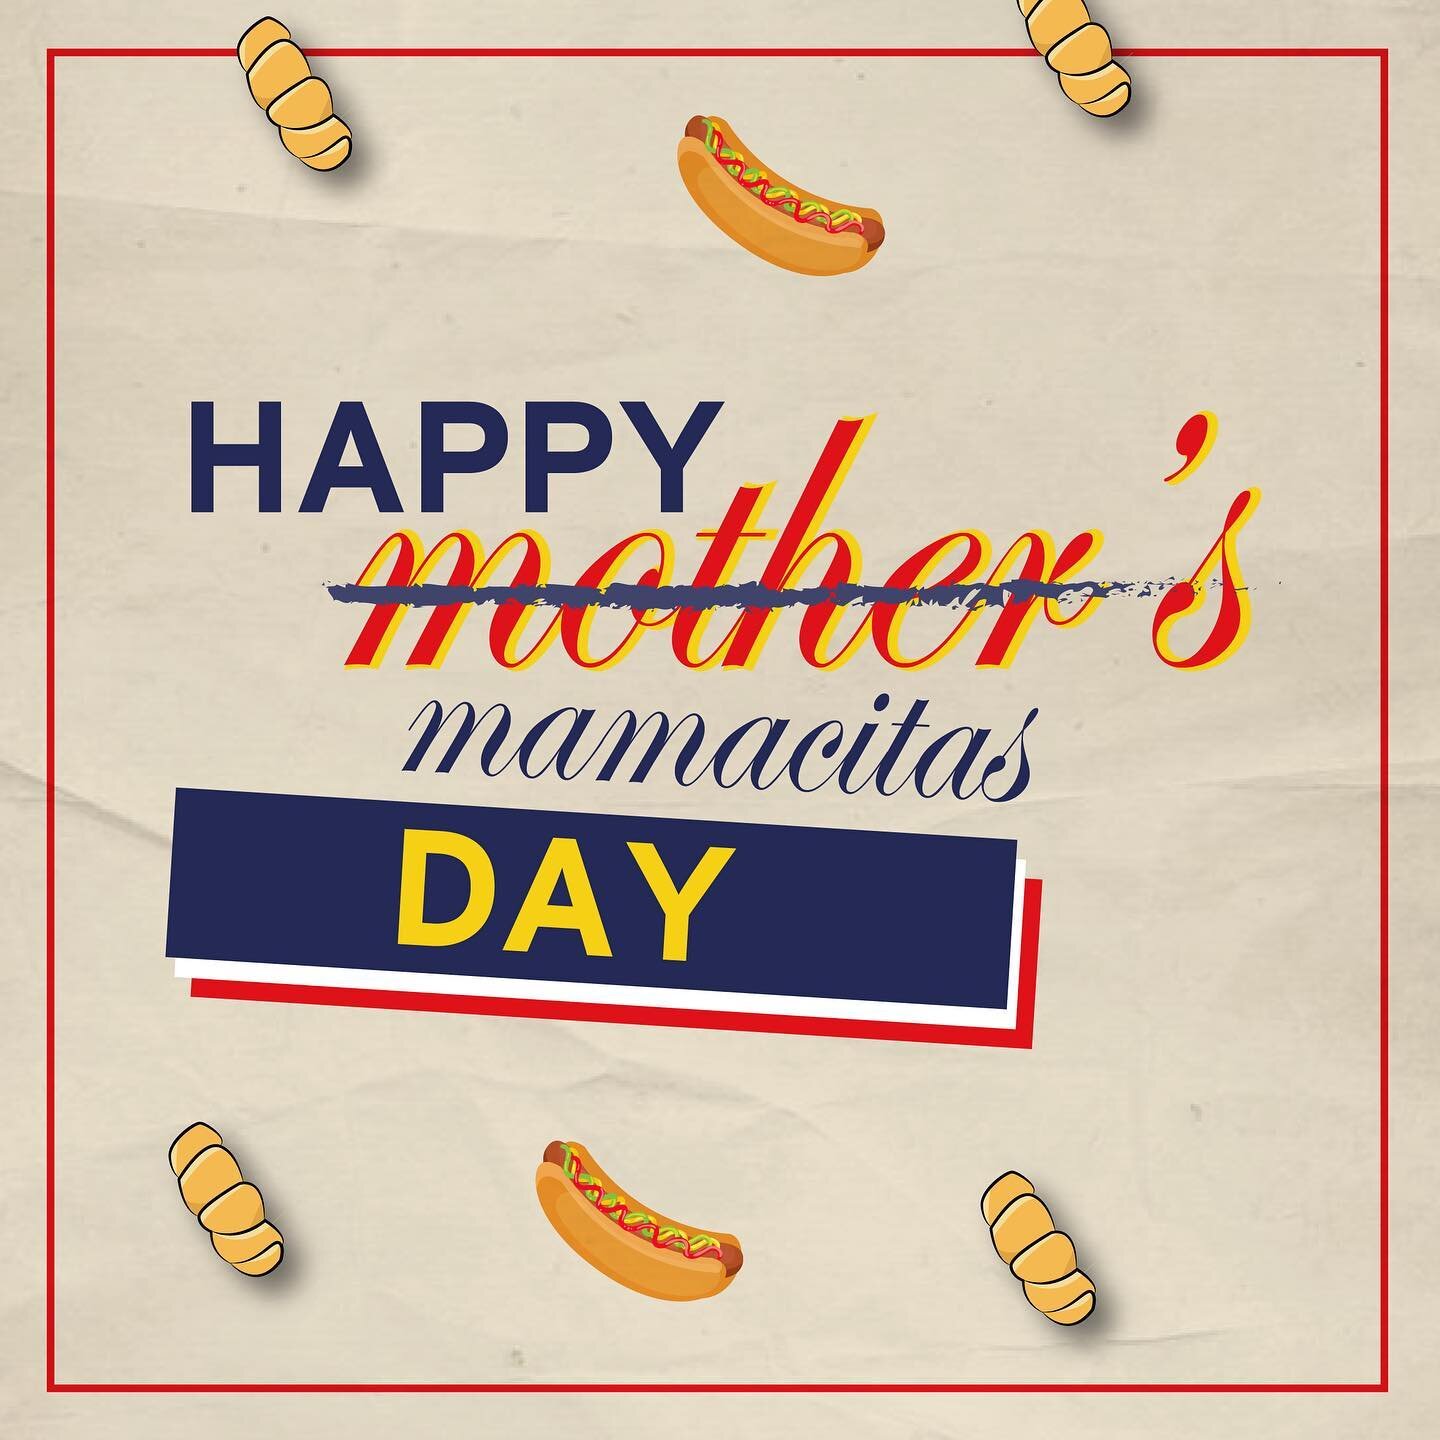 Celebrate mom with her favorite Venezuelan food! Find us today at our speakeasy and at @venezuelanrestaurantweek (last day!😱)

@venezuelanrestaurantweek @venezolanosennewyork @esmanudominguez 

#RestaurantWeek #MothersDay